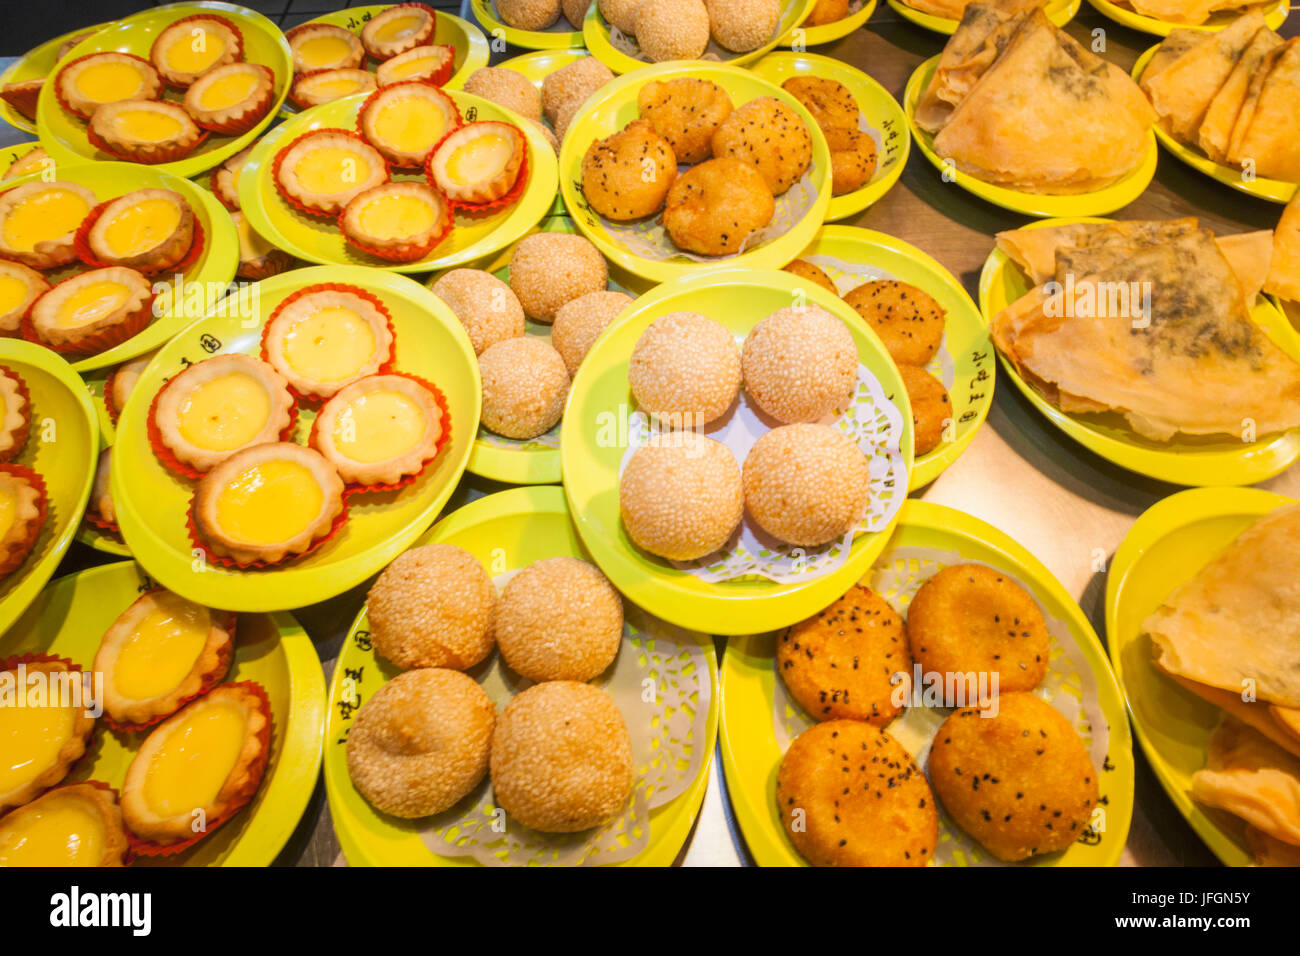 China, Shanghai, Yuyuan Garden, Restaurant Display of Desserts Stock Photo